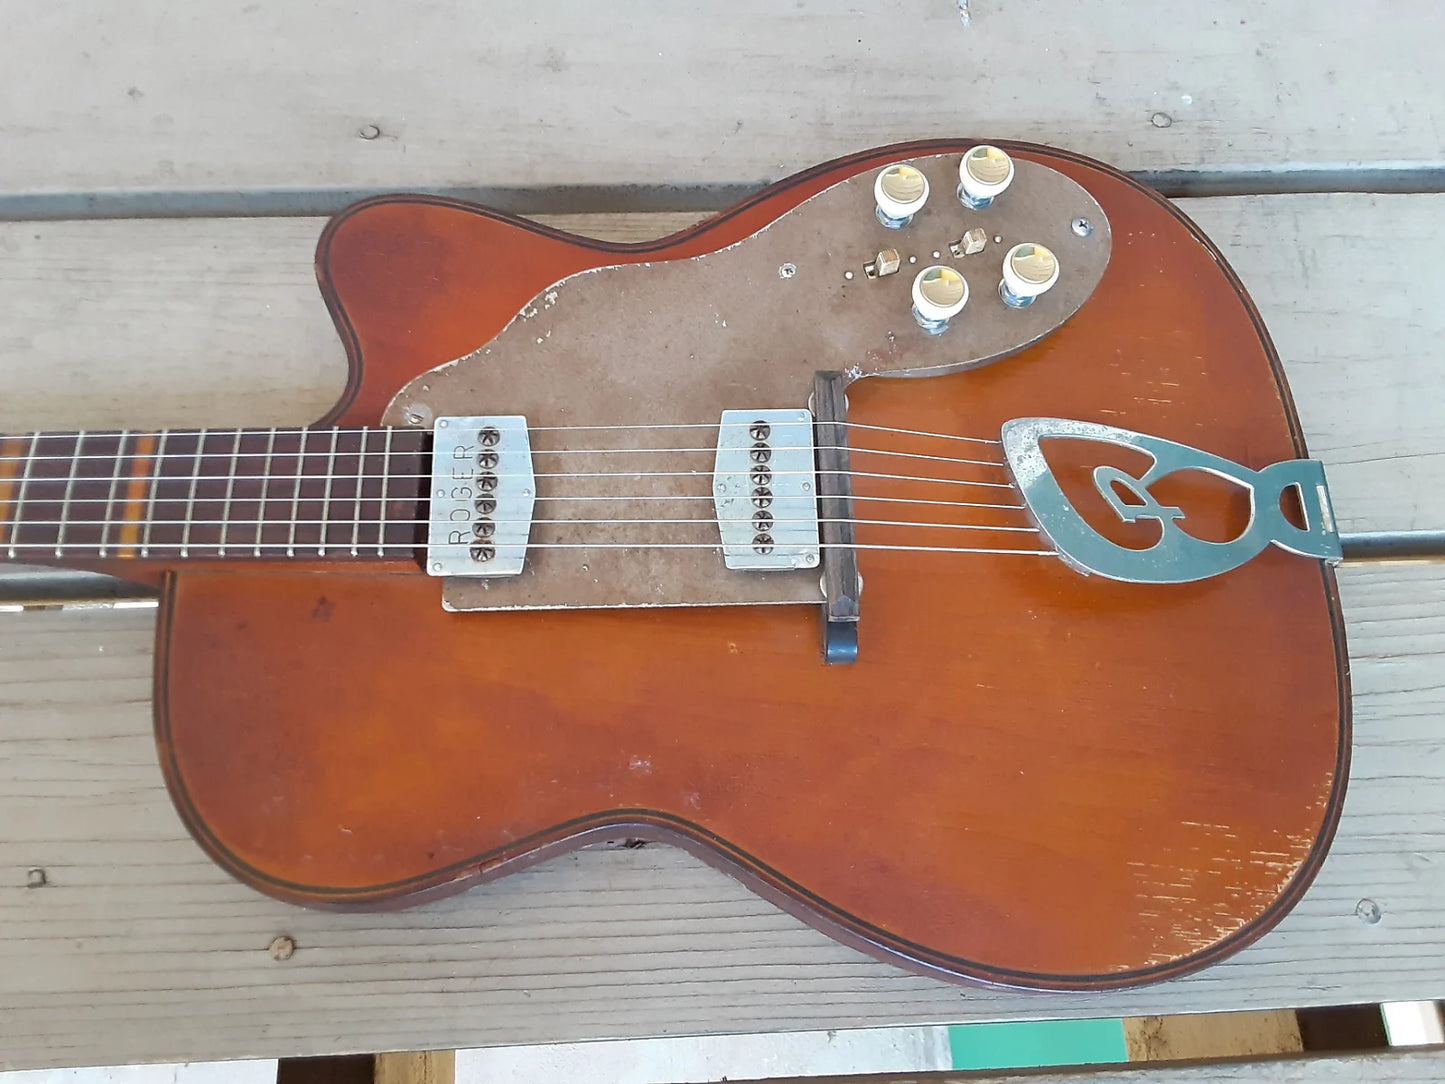 Roger Electric Electric Guitar Late 1950s - Rare German Built - Rickenbacker, Fender Ties - Fair Condition